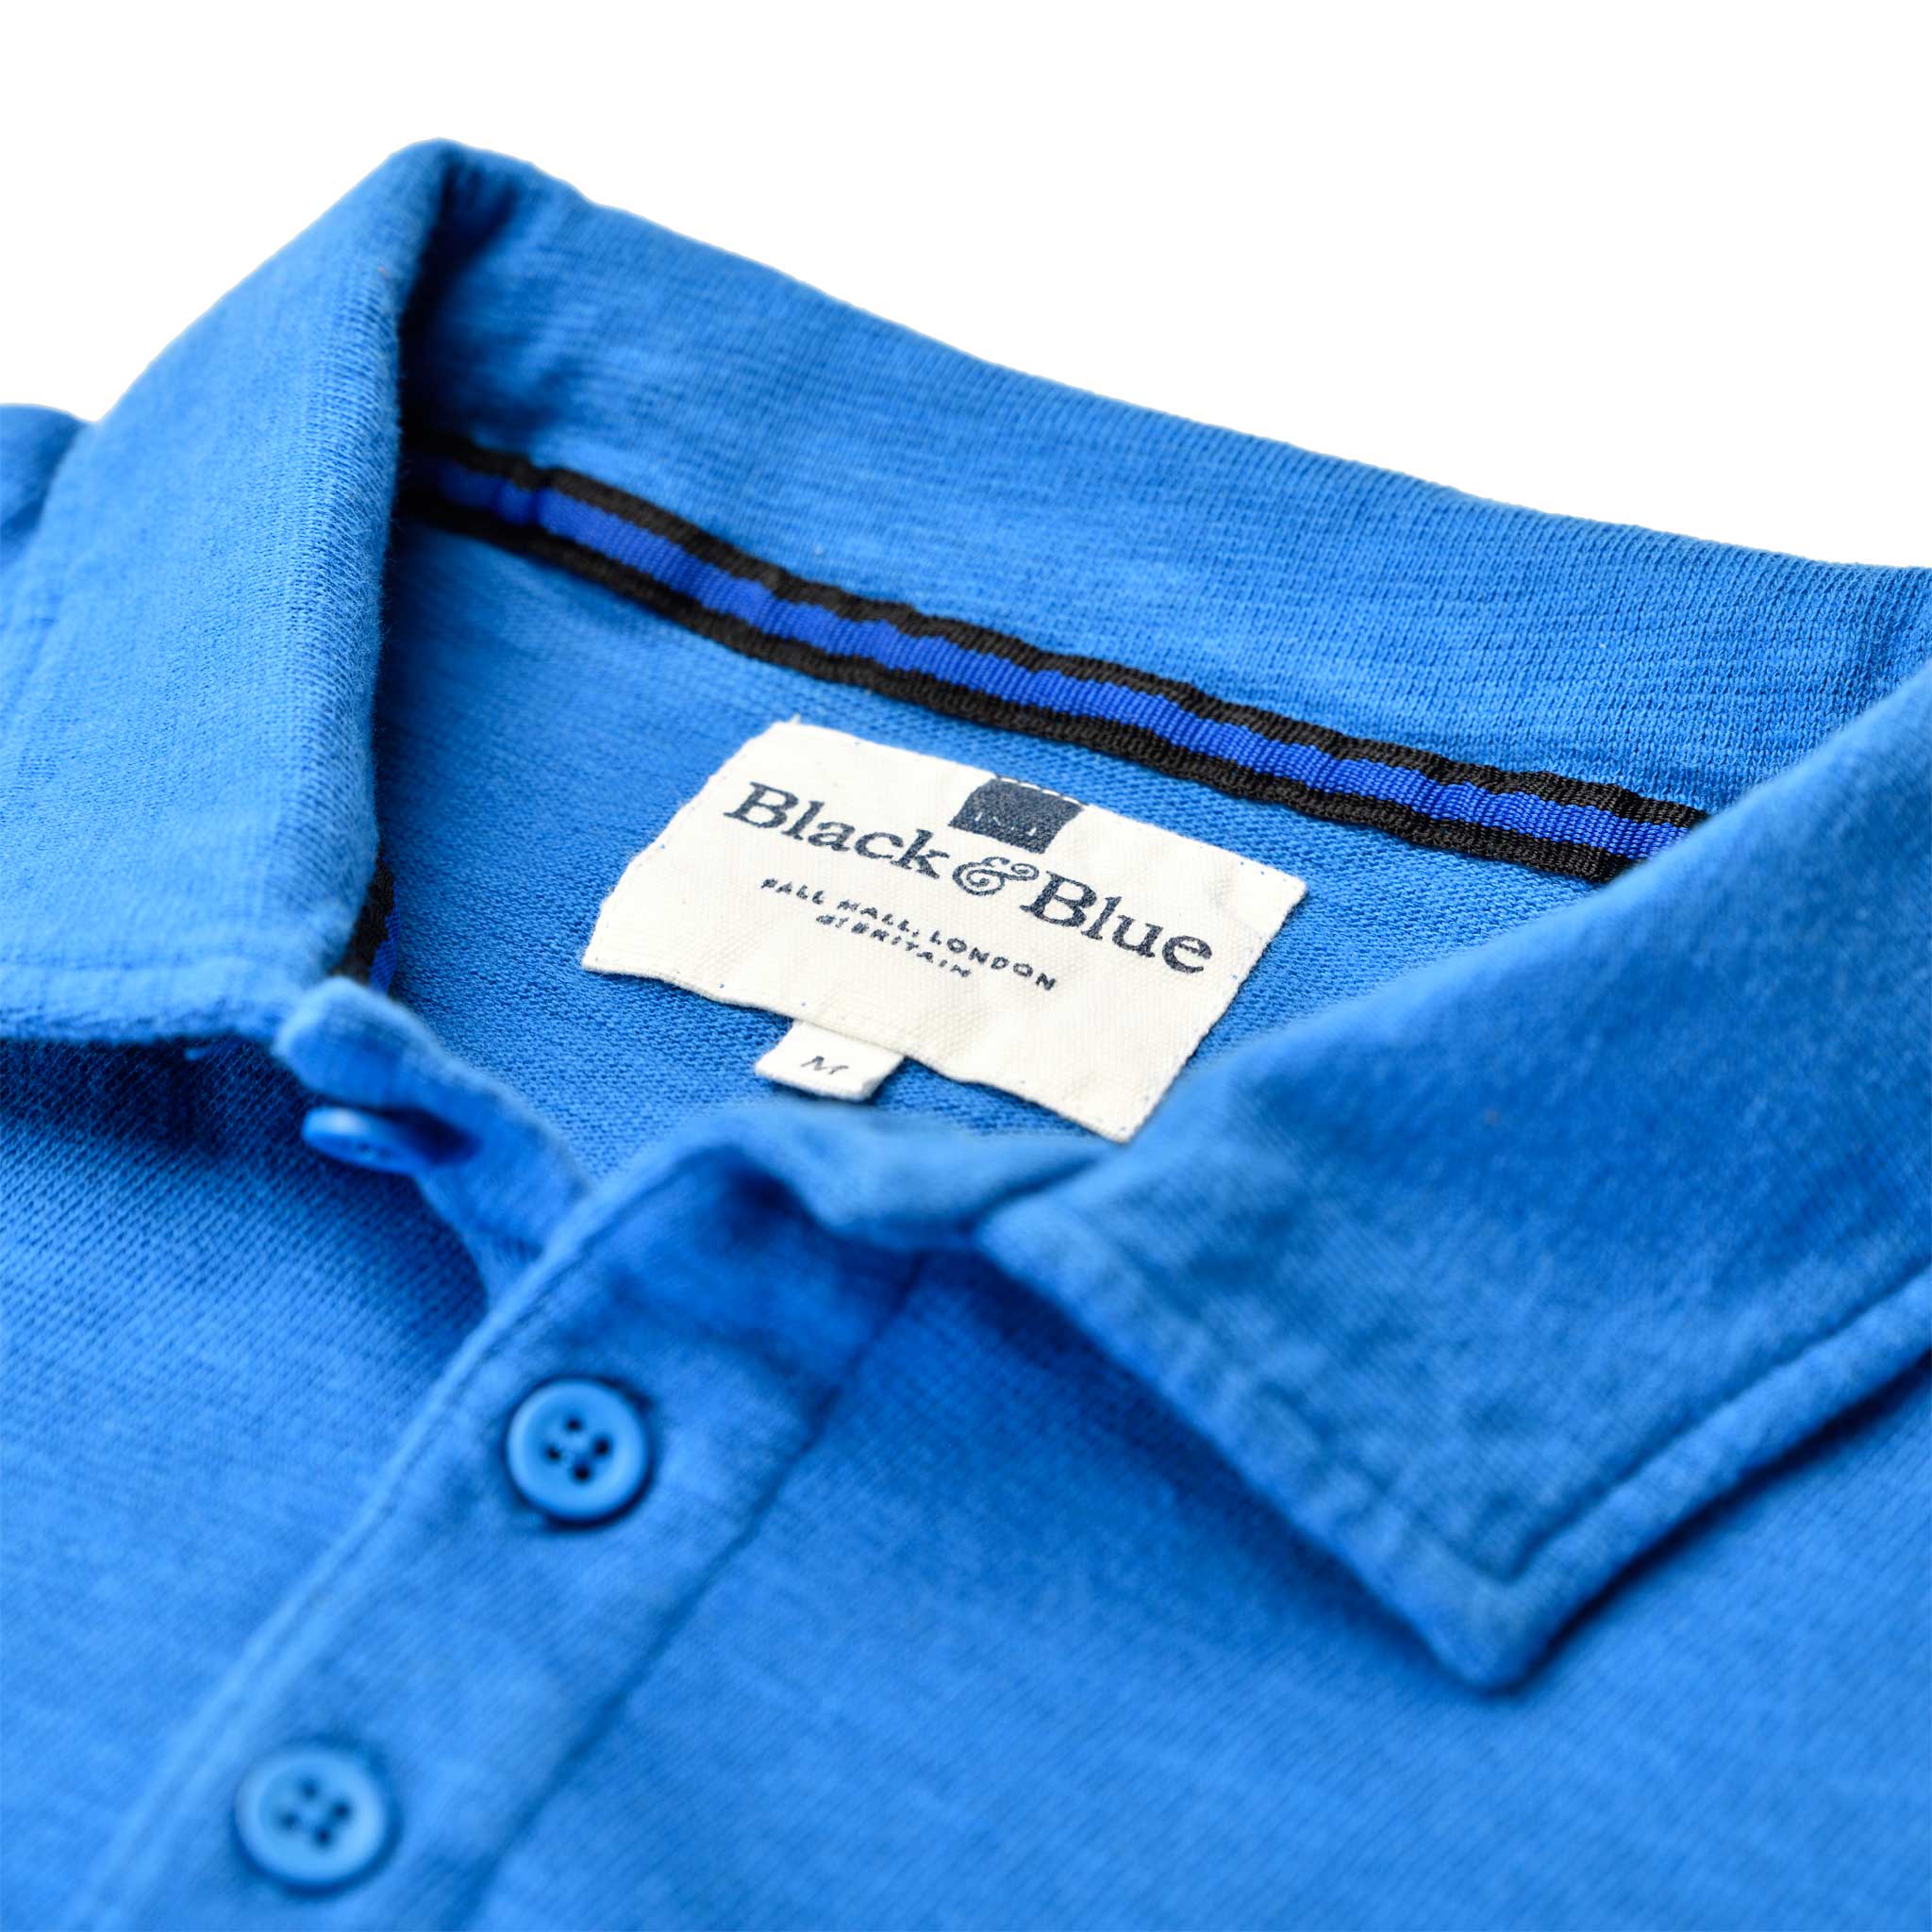 Black & Blue - 1871 Polo Shirt